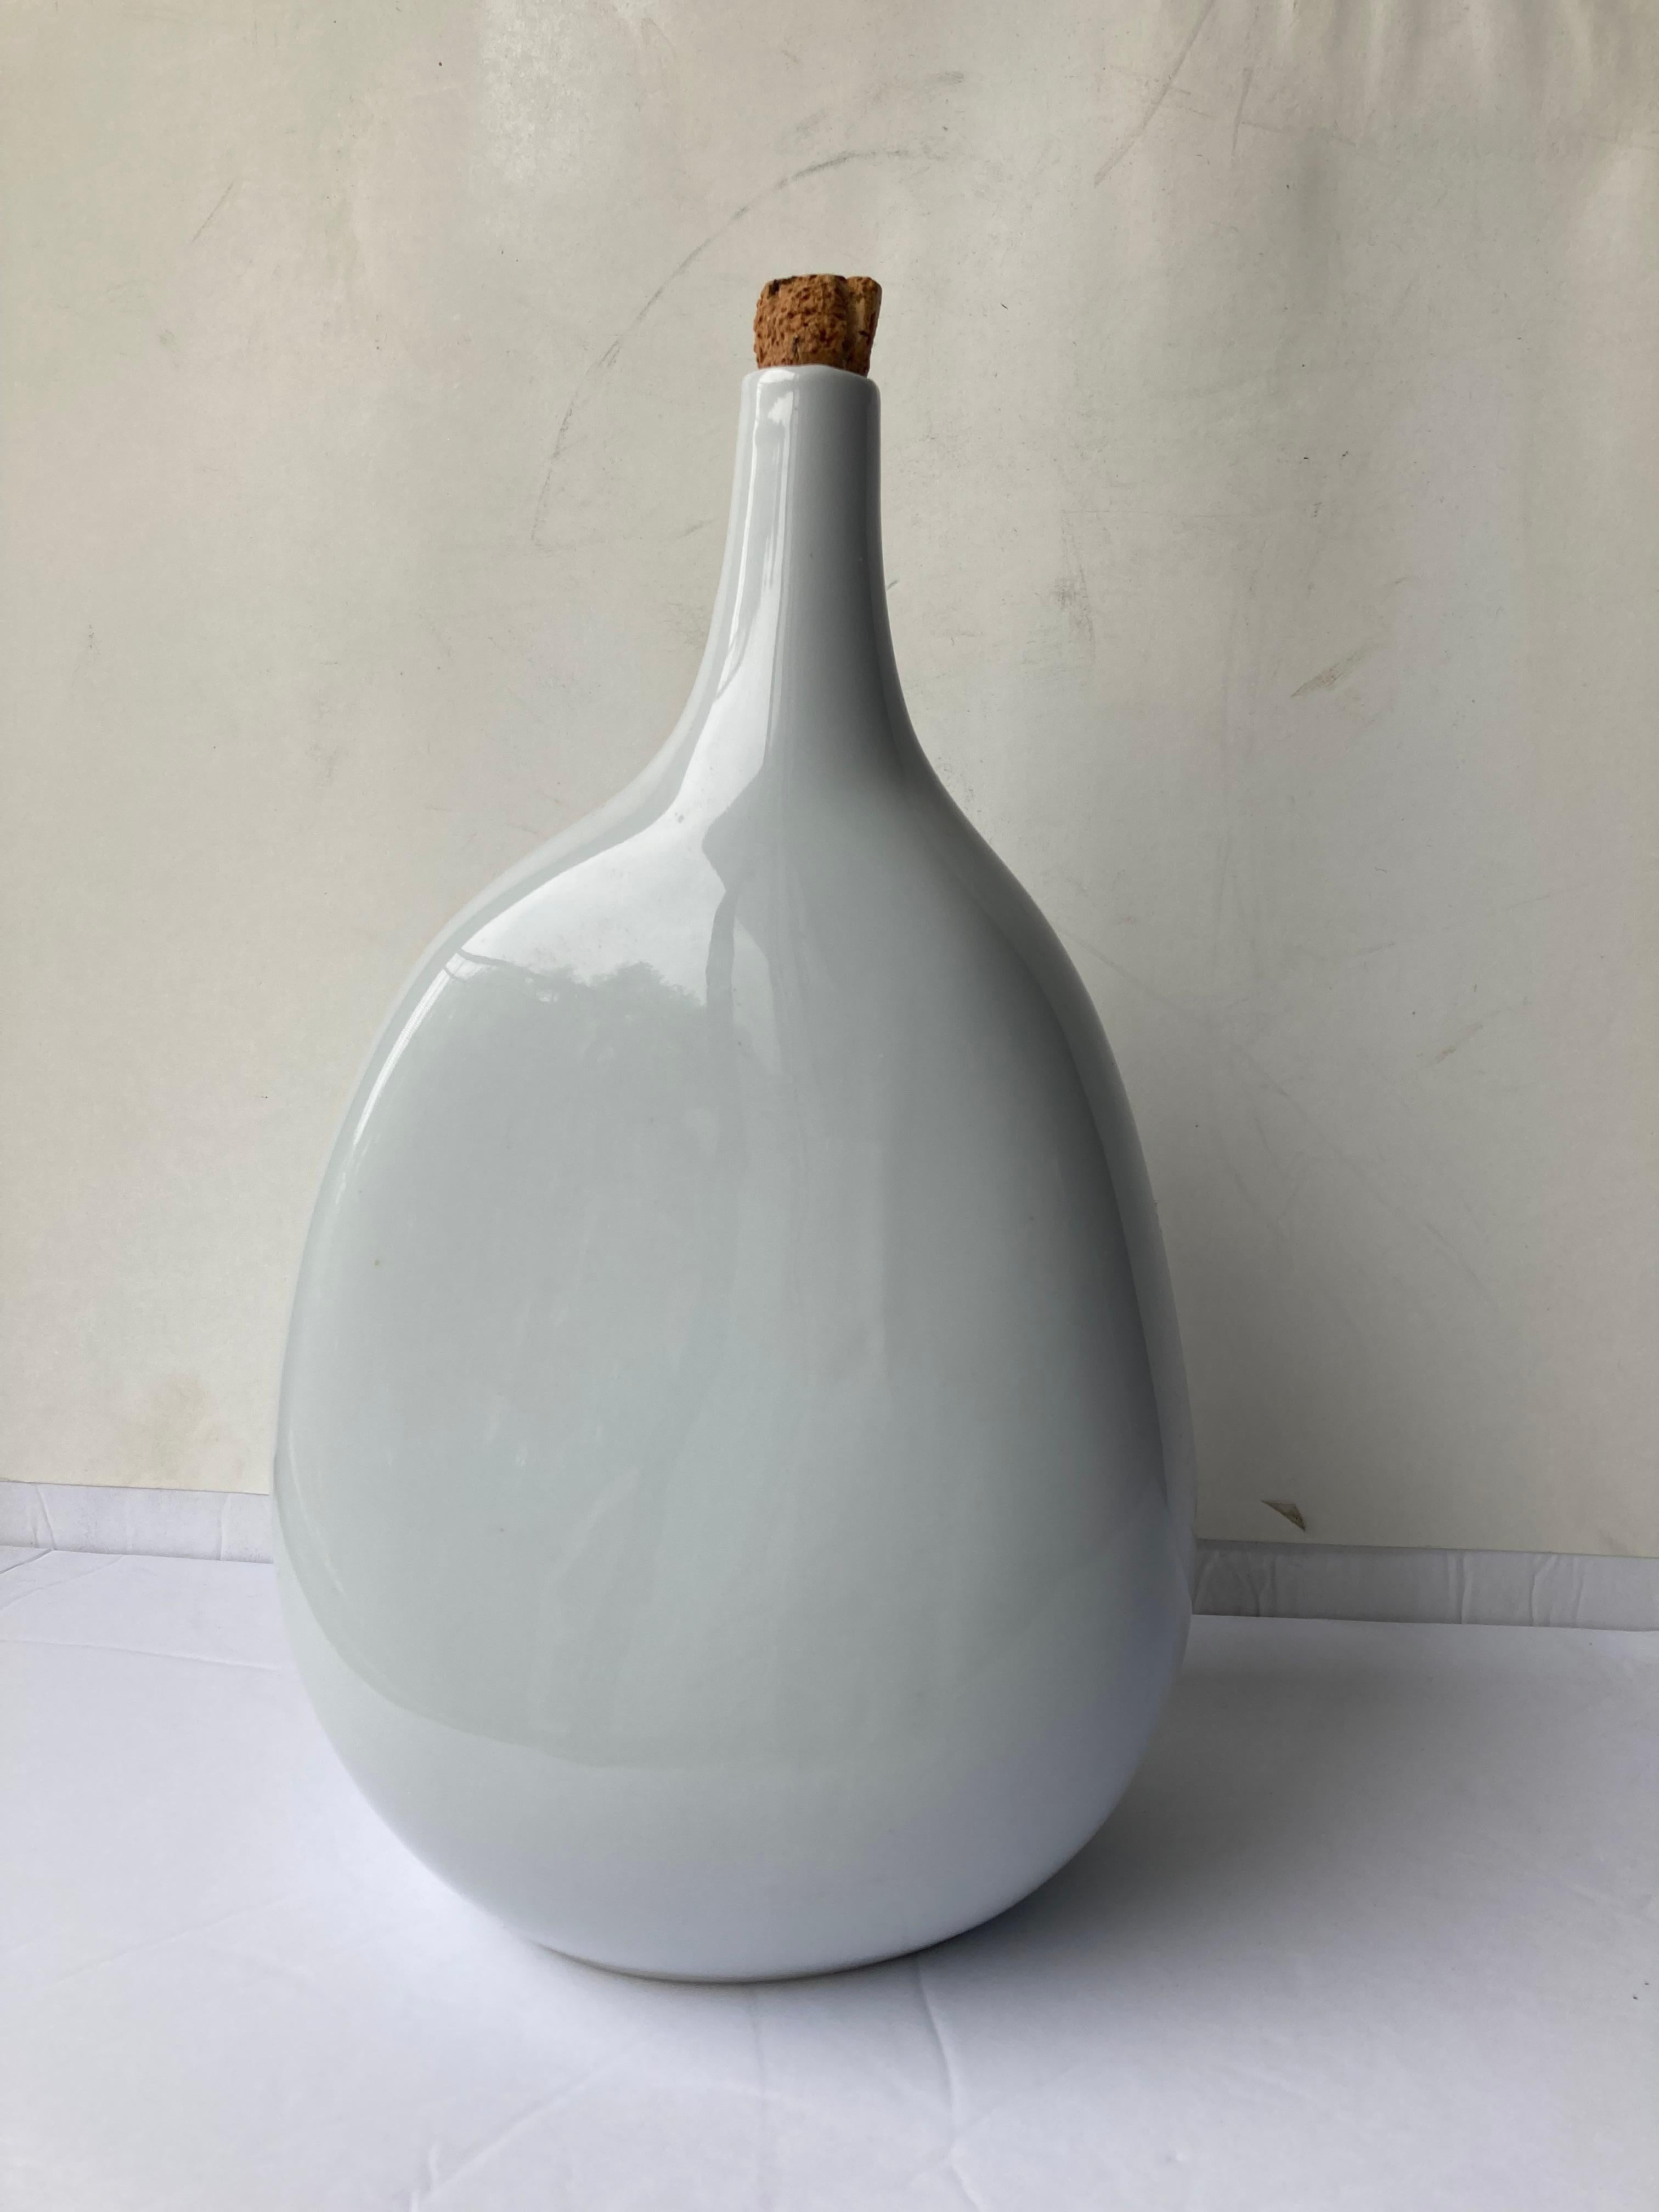 Great sample of modern design in this amazing  Vinegar bottle/cruet by Lagardo Tackett .